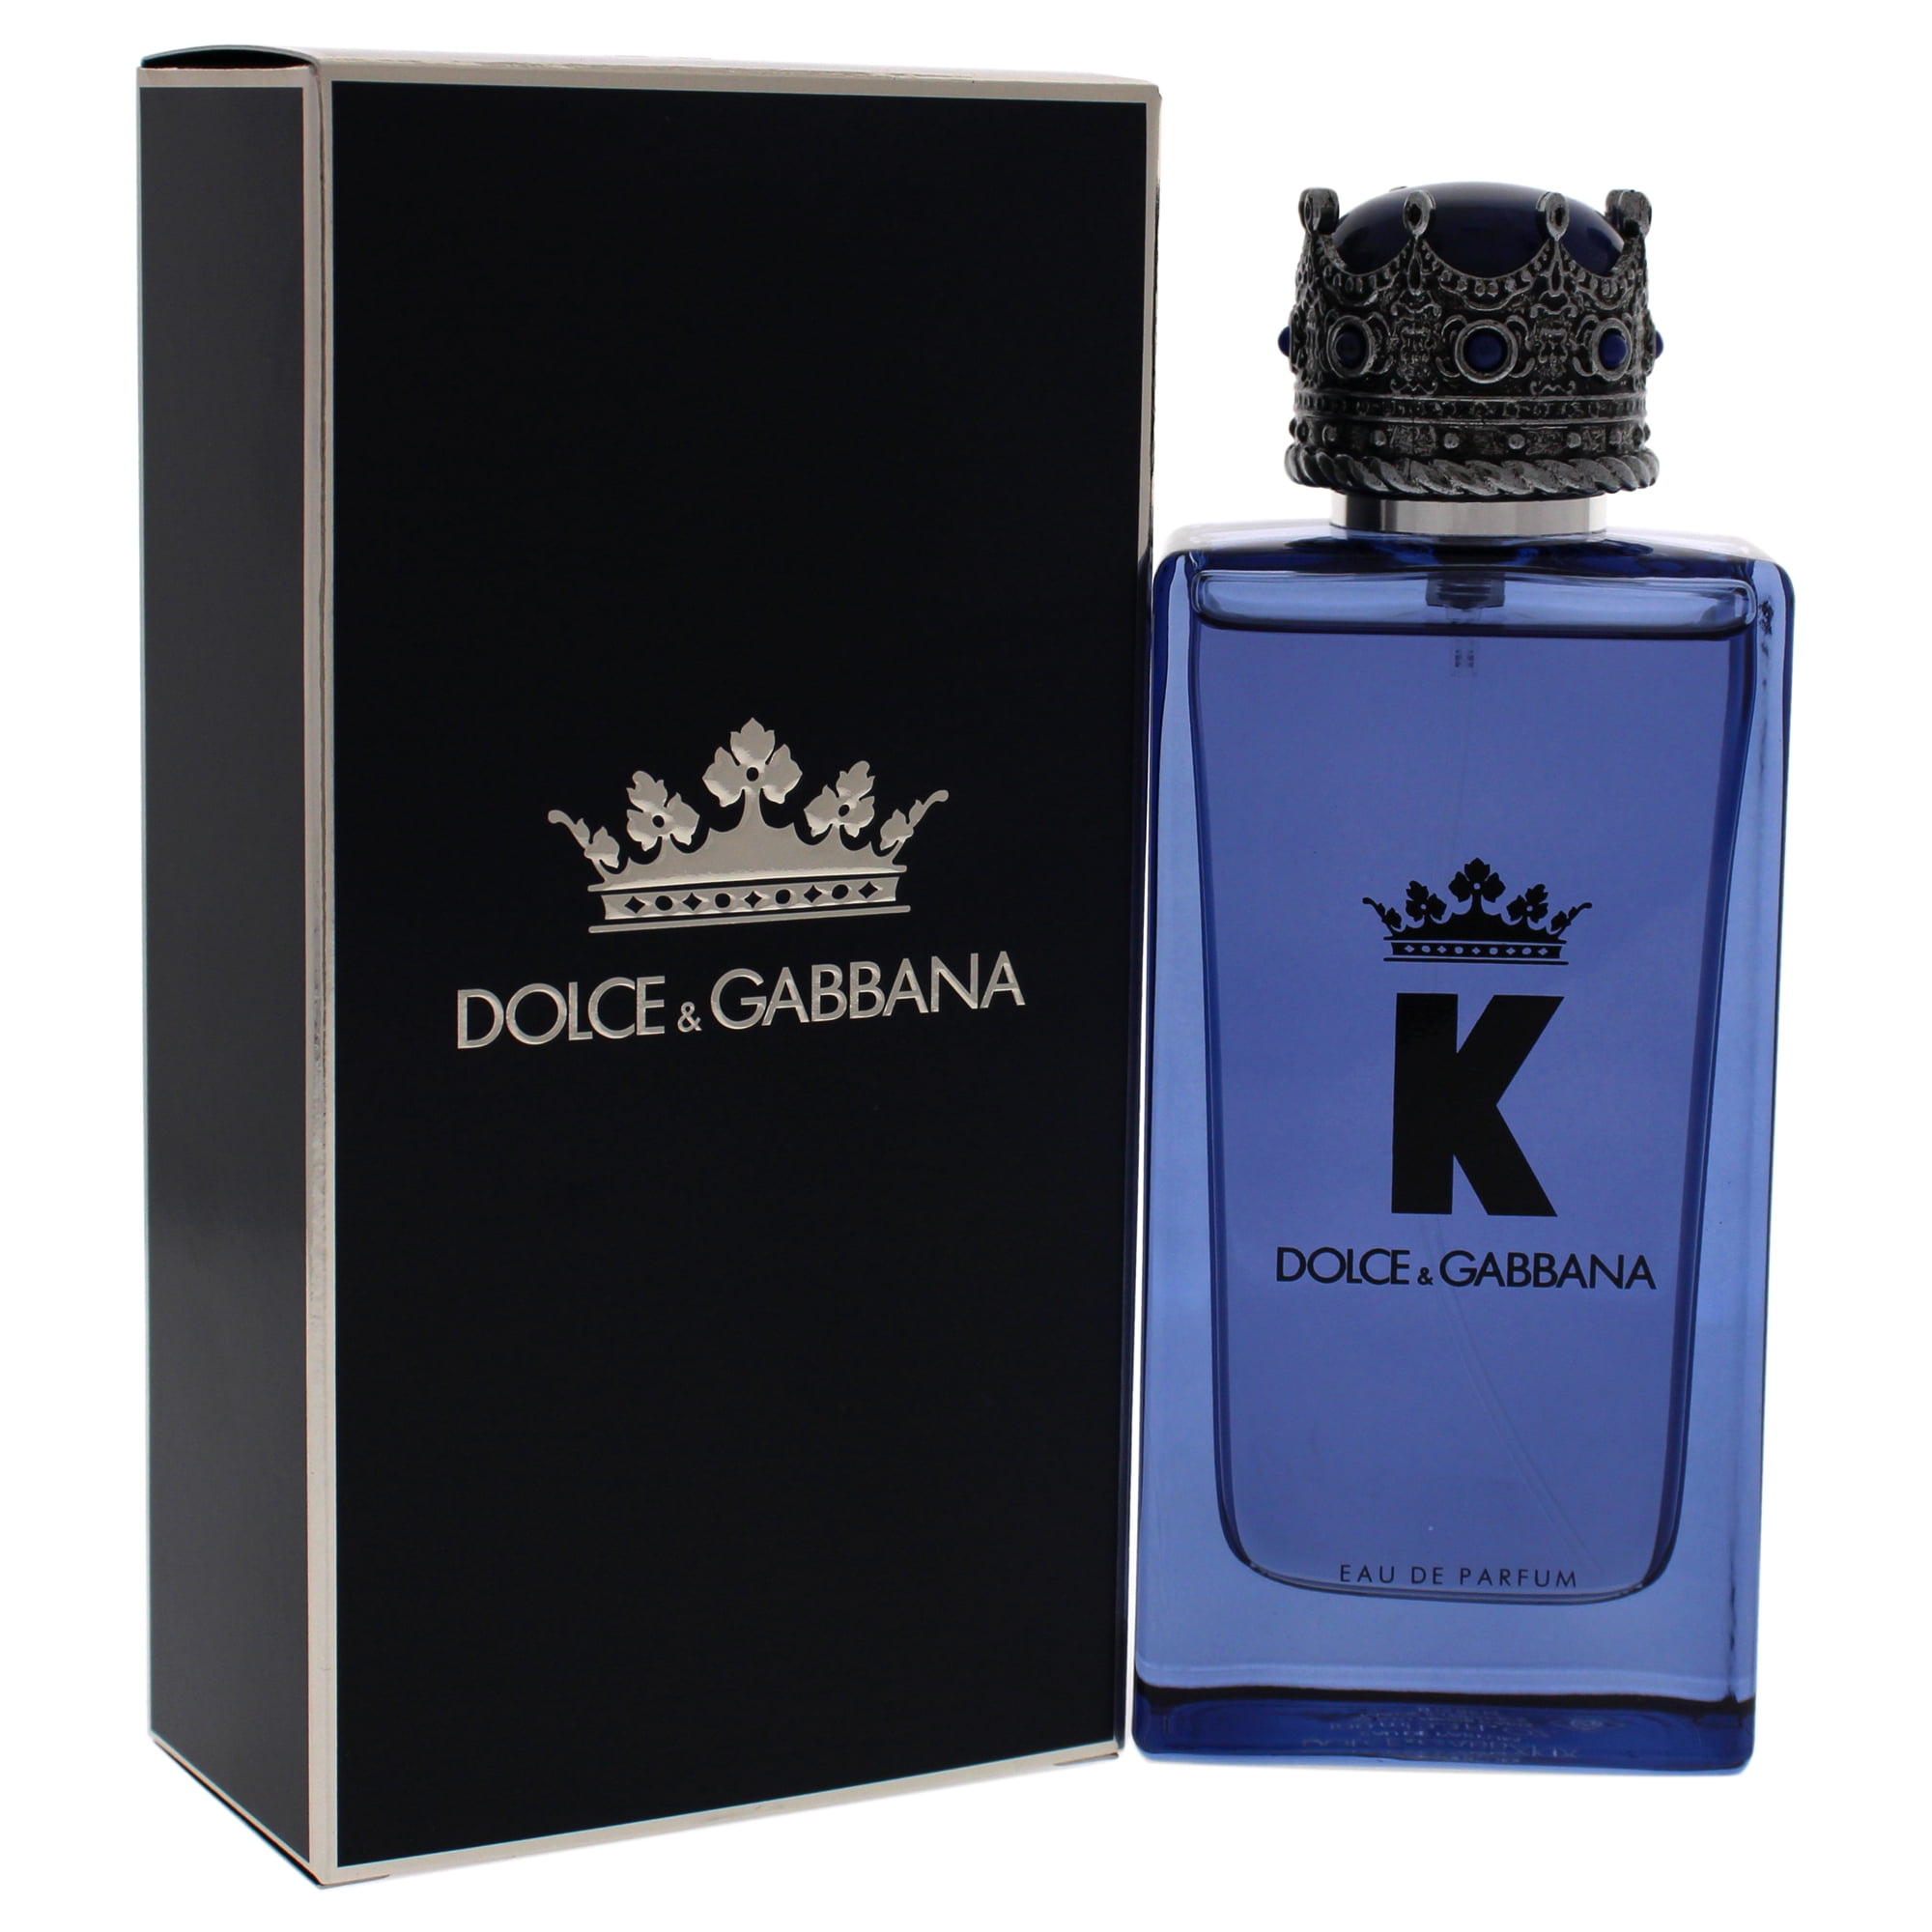 Dolce Gabbana King. Духи Дольче Габбана Кинг. K by Dolce Gabbana. Q by Dolce & Gabbana отзывы. Дольче габбана духи мужские с короной